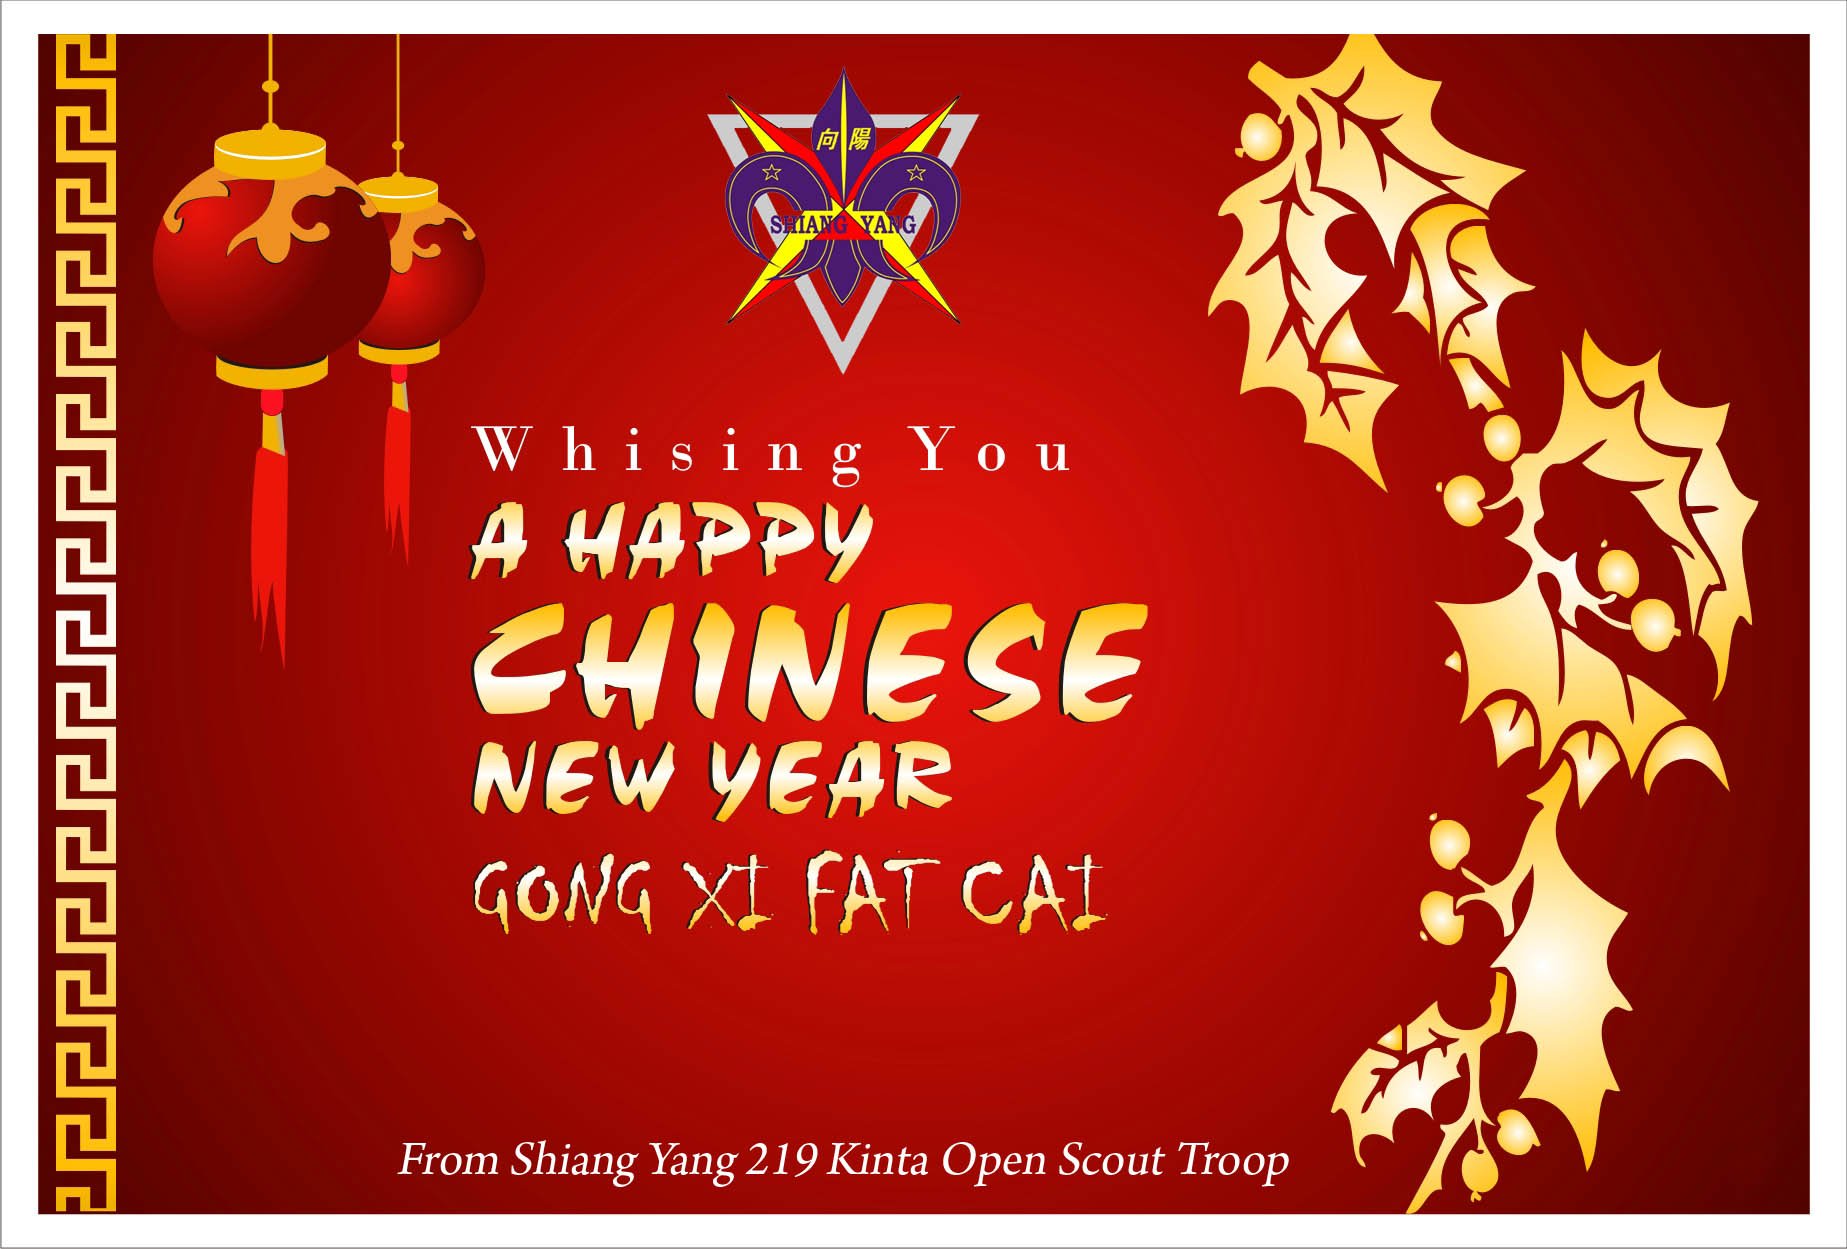 Happy Chinese New Year 2013